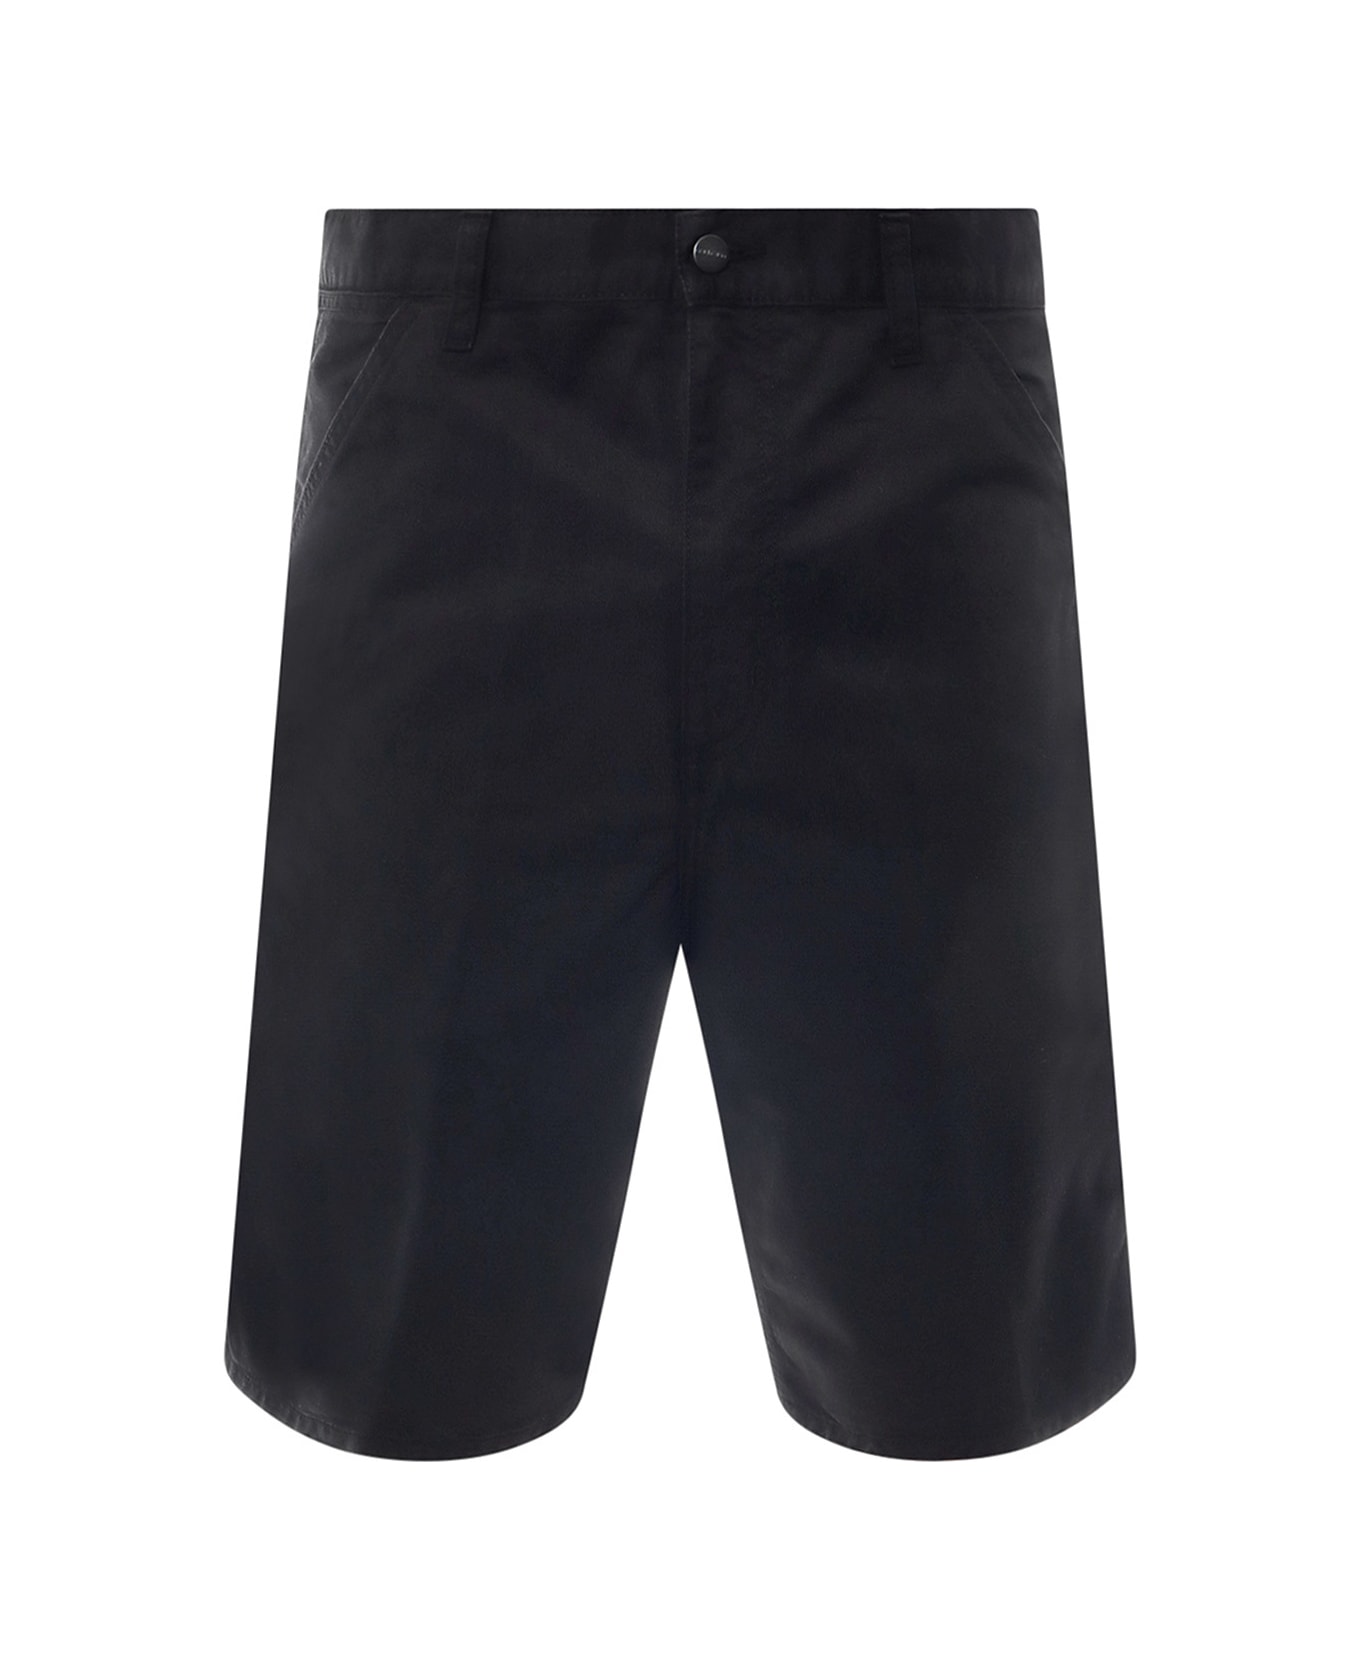 Carhartt Bermuda Shorts - Black